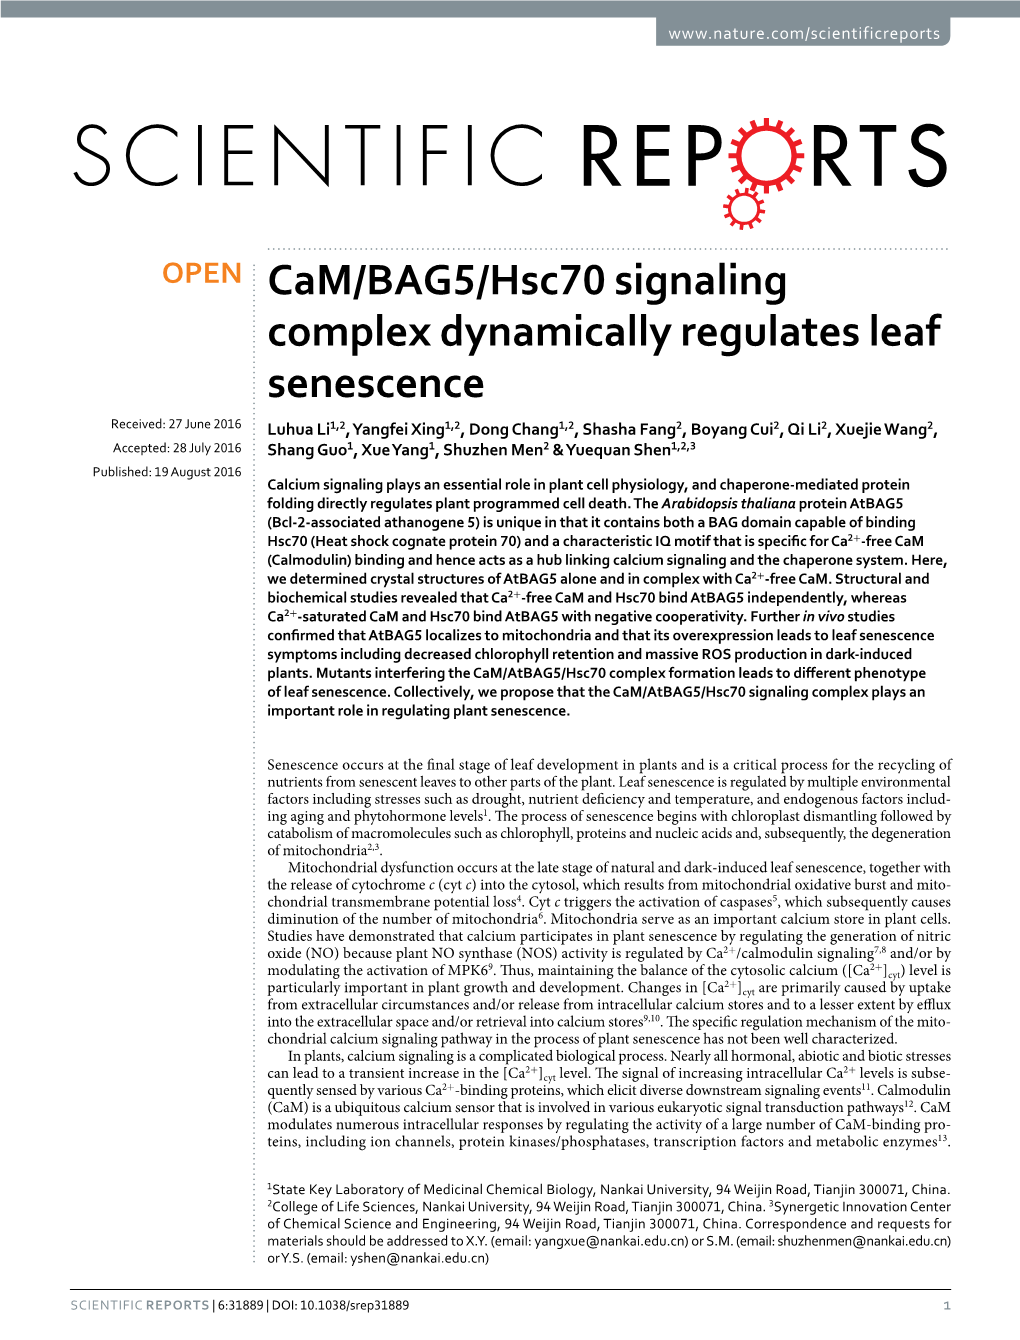 Cam/BAG5/Hsc70 Signaling Complex Dynamically Regulates Leaf